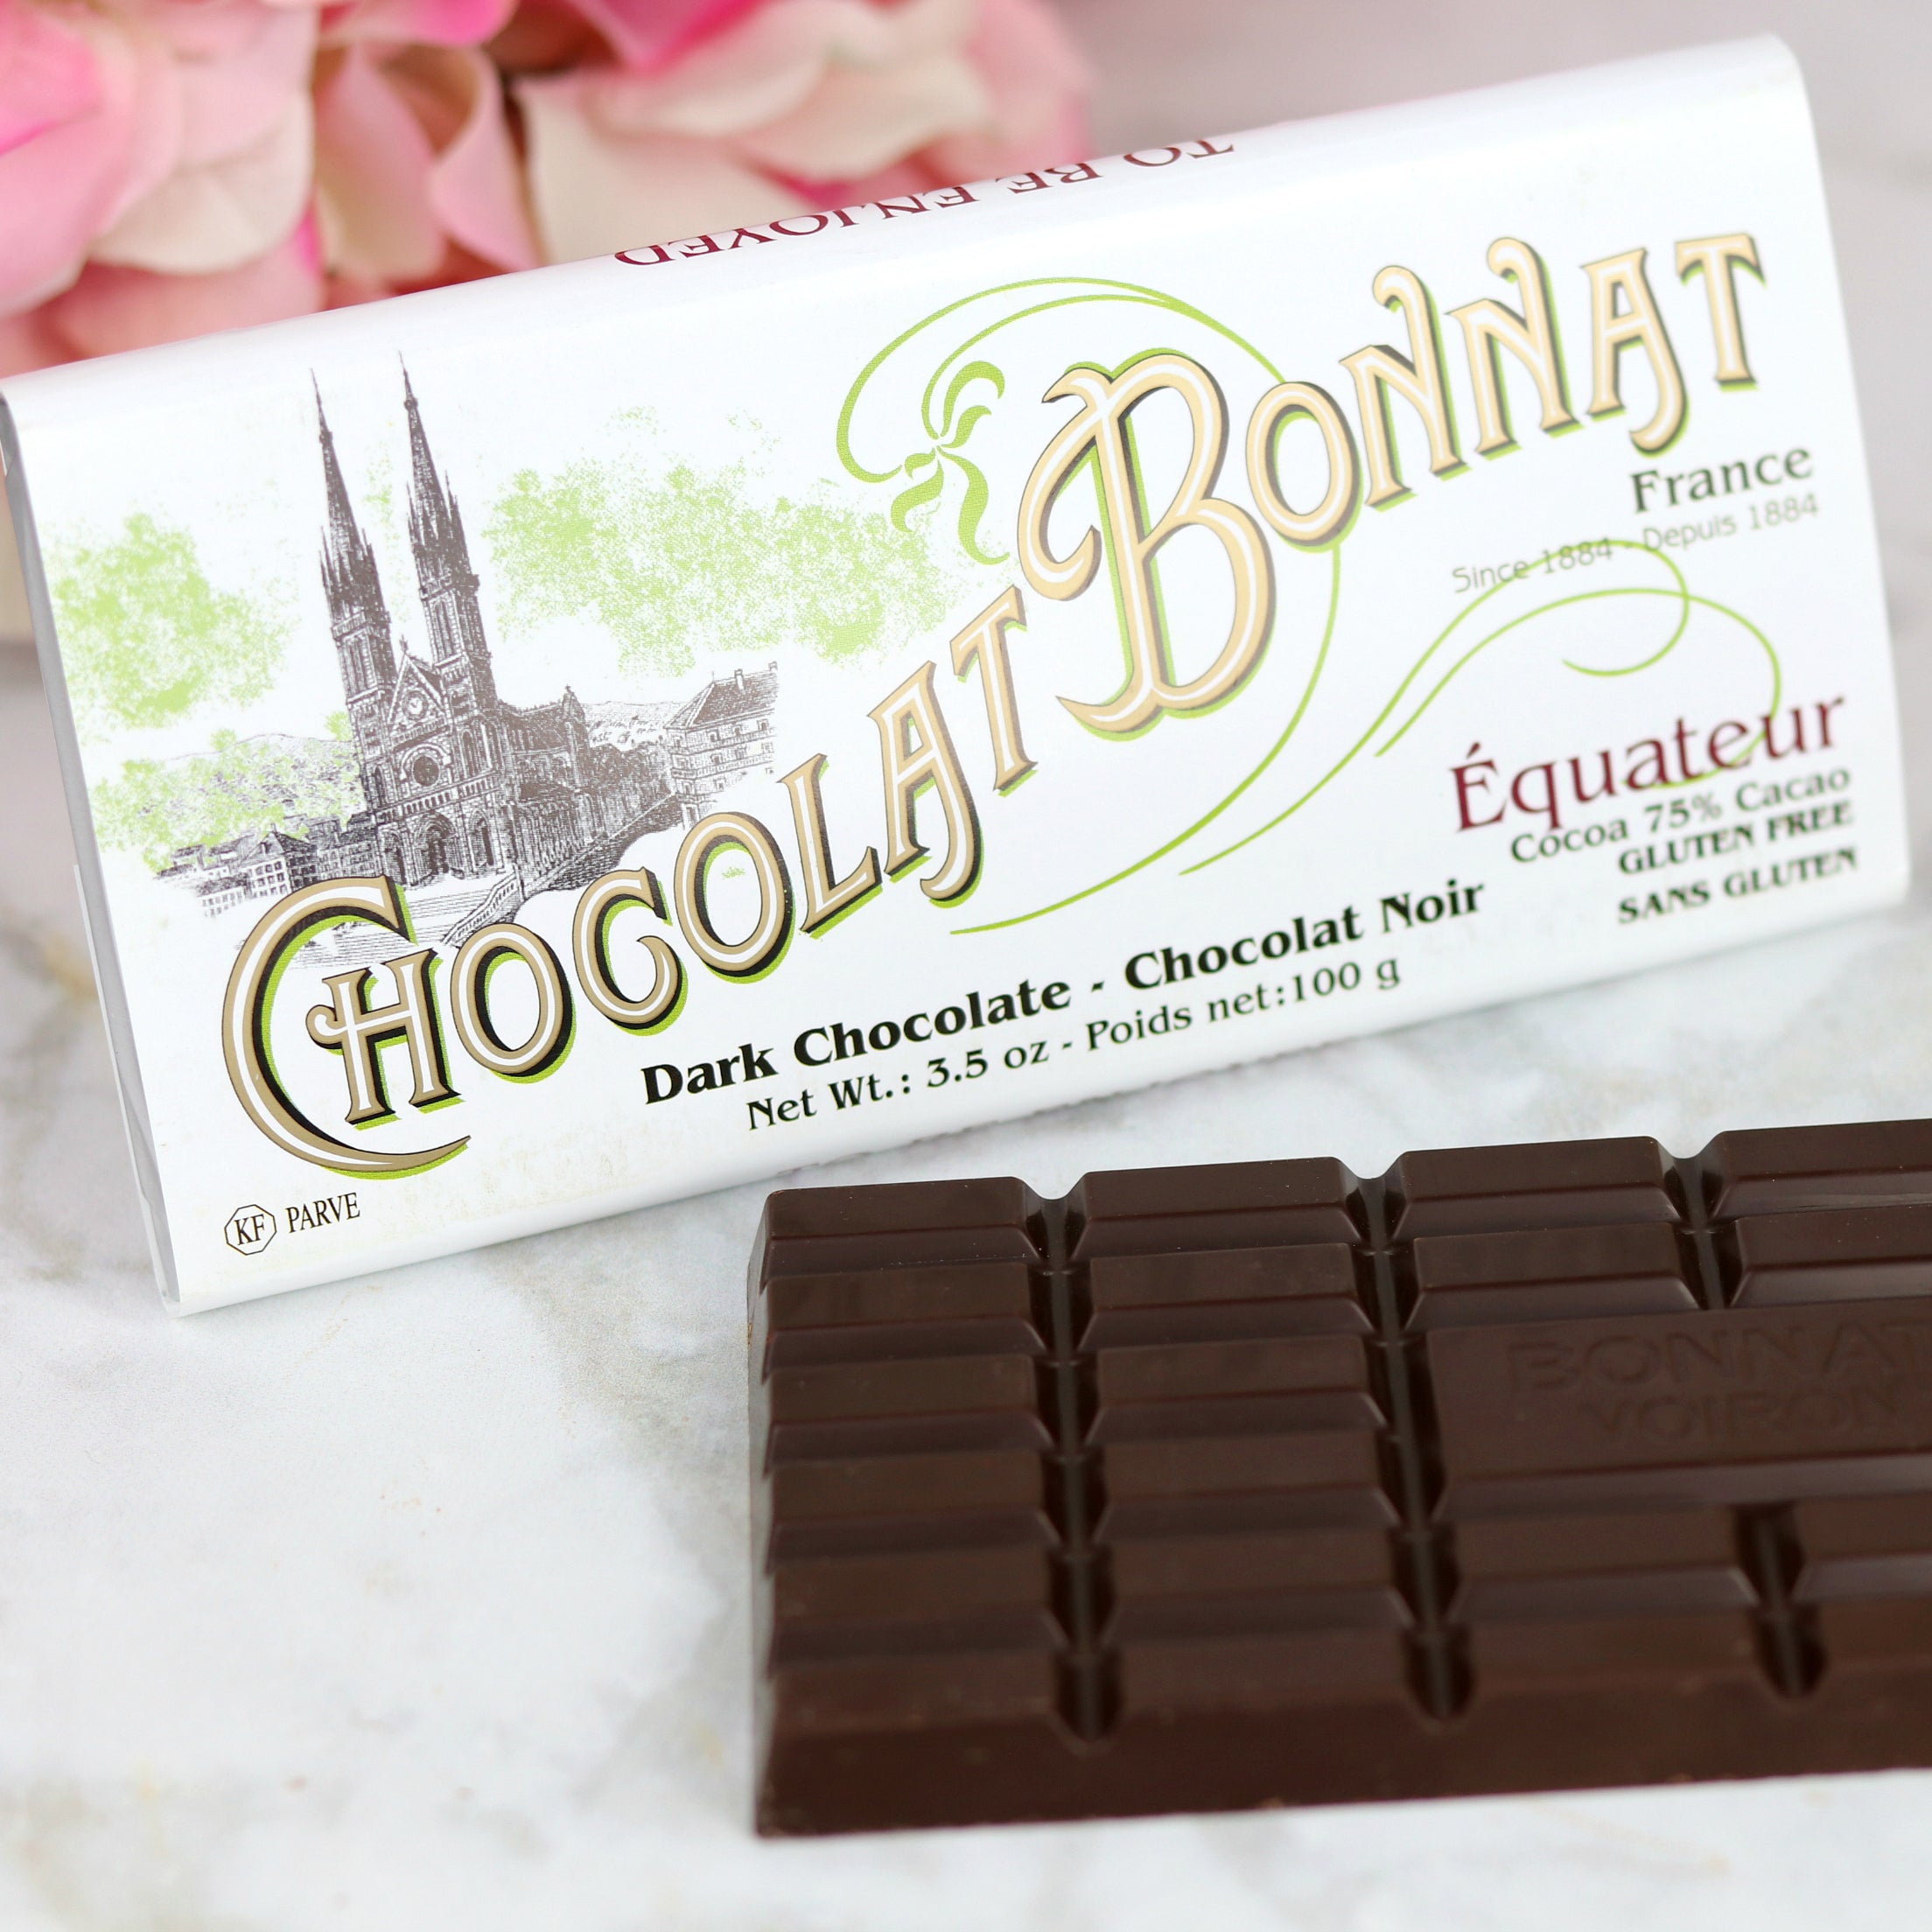 Single Origin Dark Chocolate Bonnat from Ecuador - Noemie's Pantry